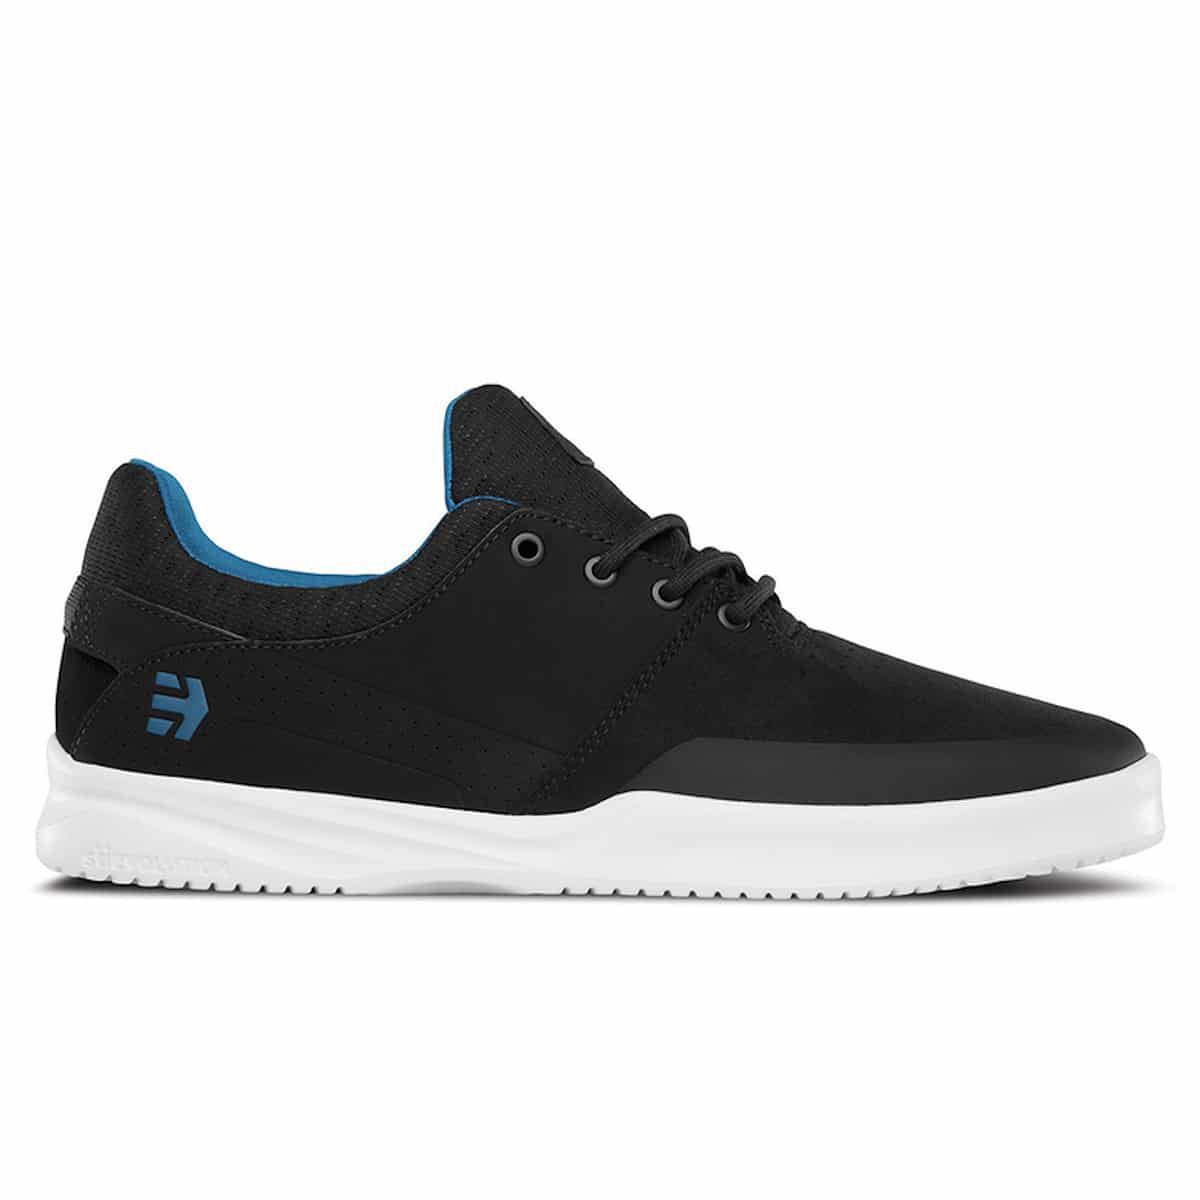 Chaussures Etnies Highlite Noir (black blue white)